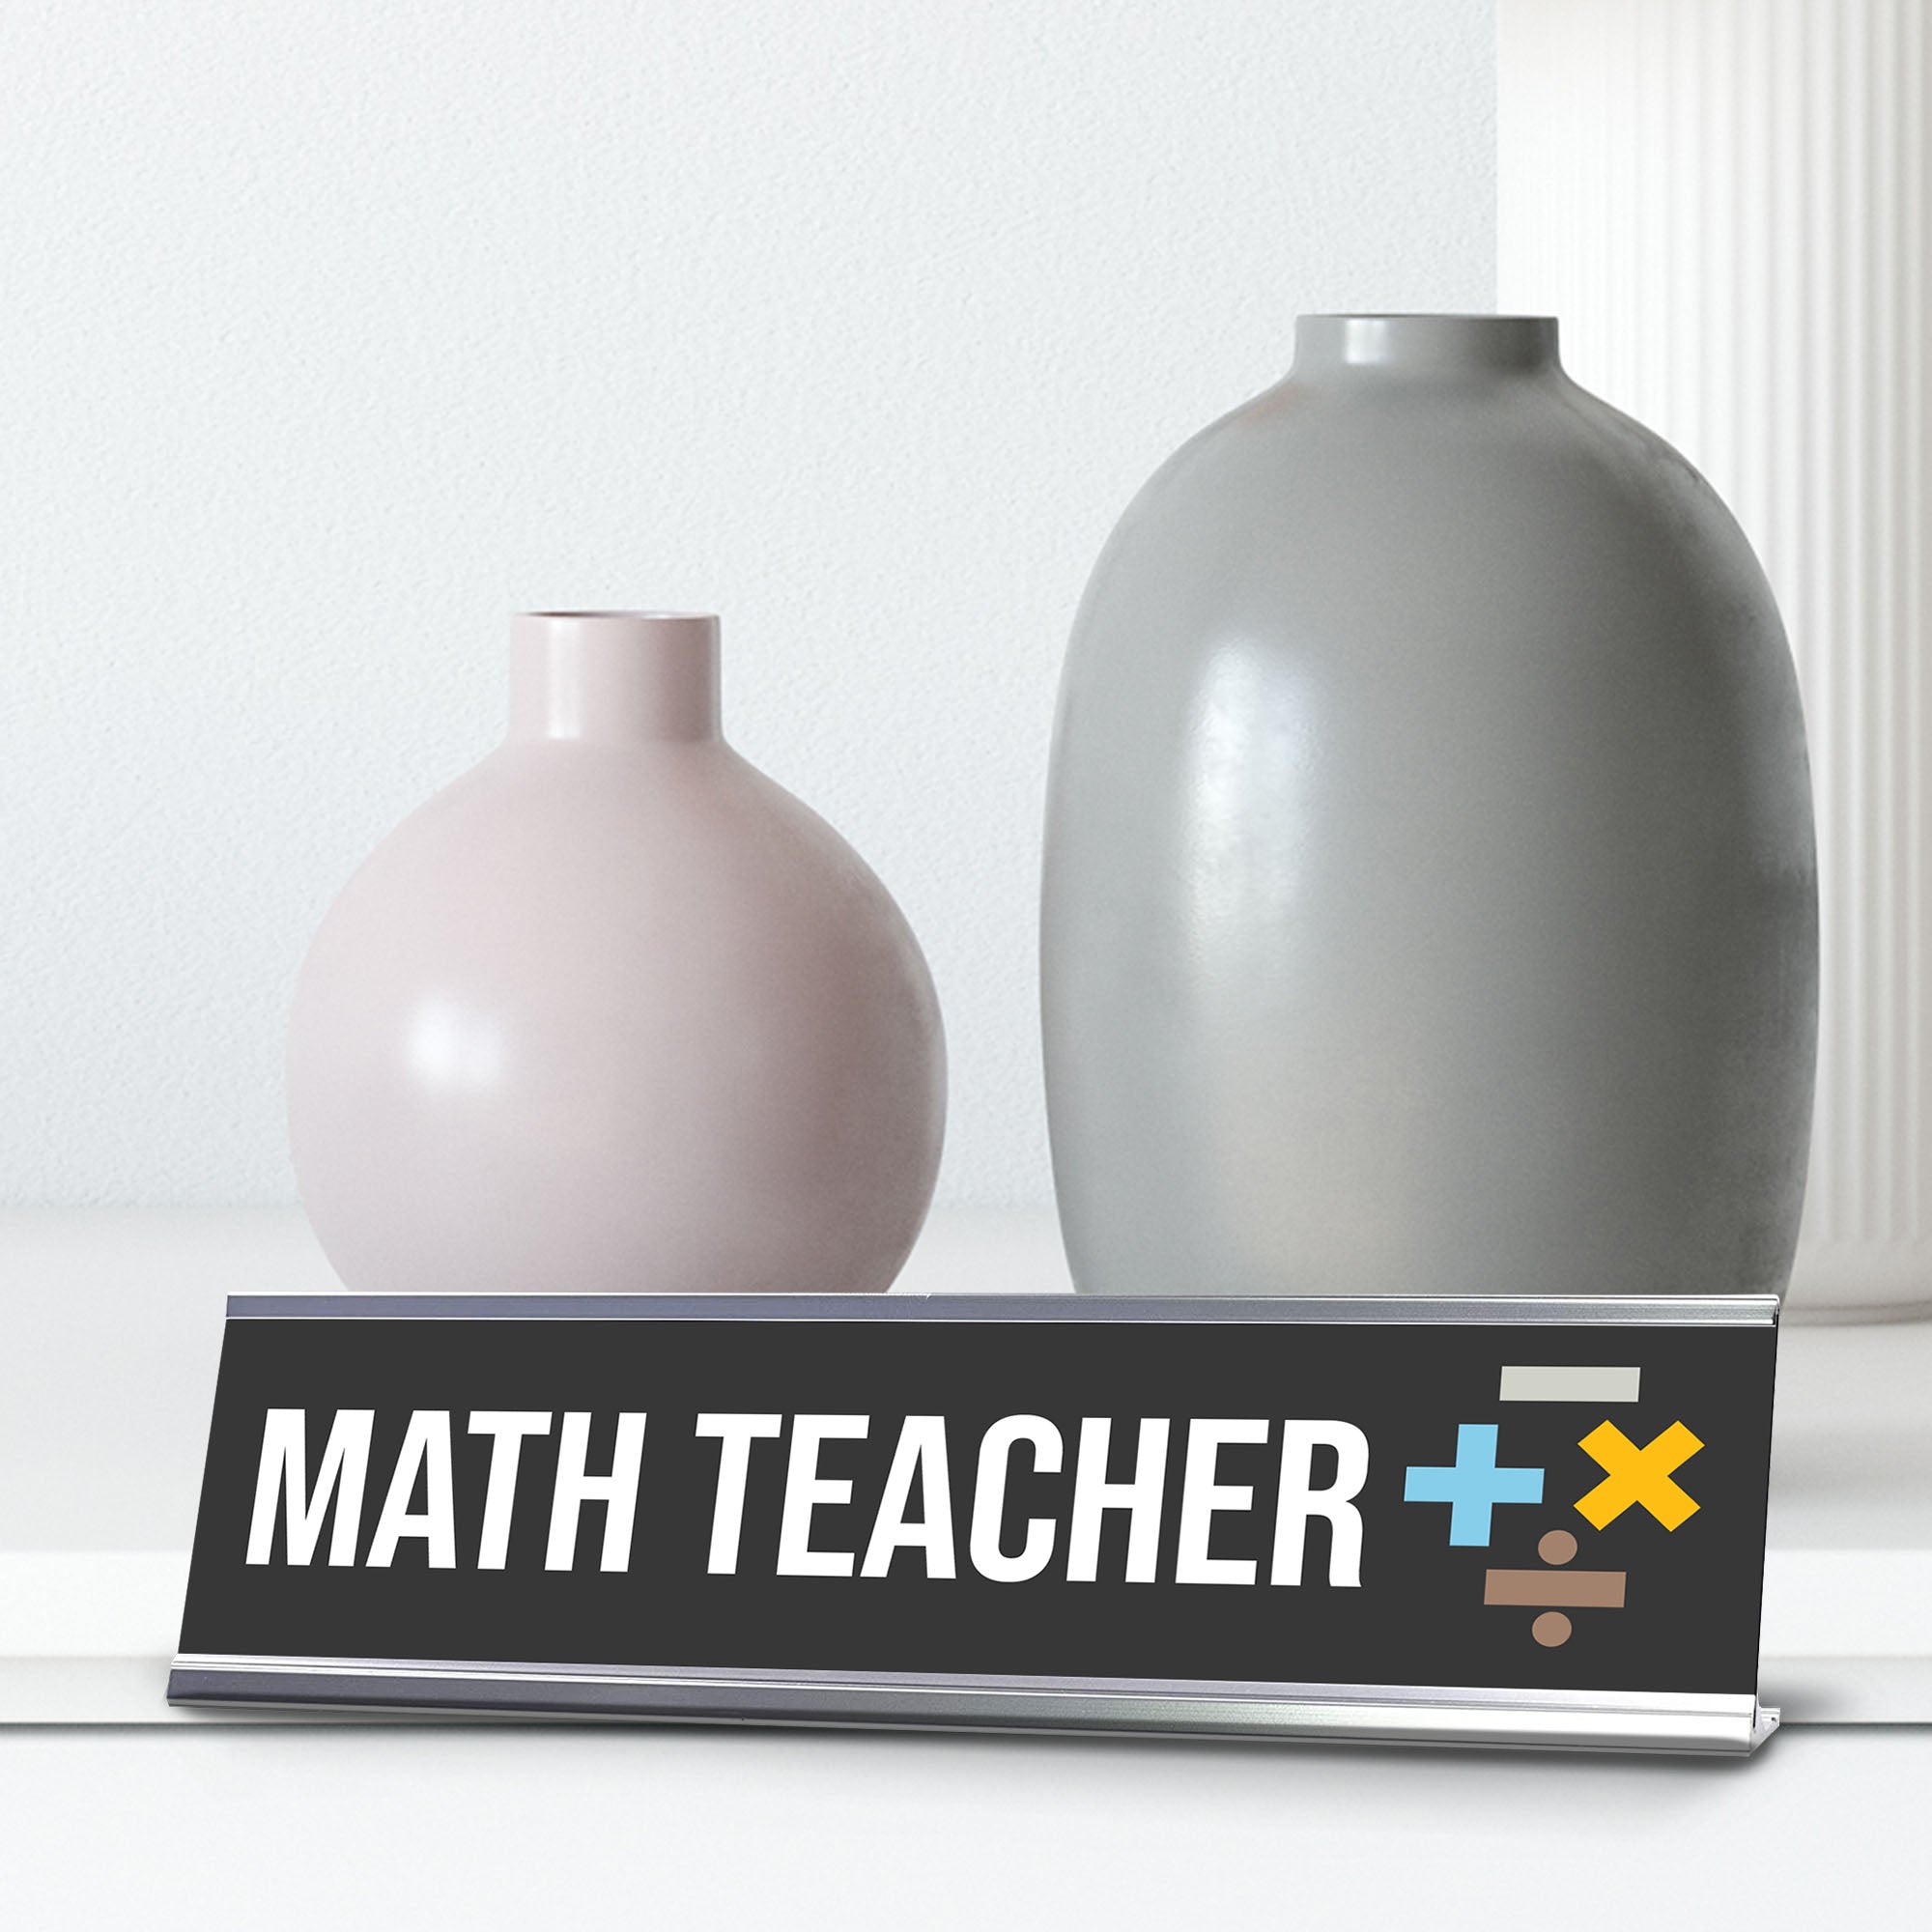 Signs ByLITA Math Teacher Silver Frame, Desk Sign (2x8")